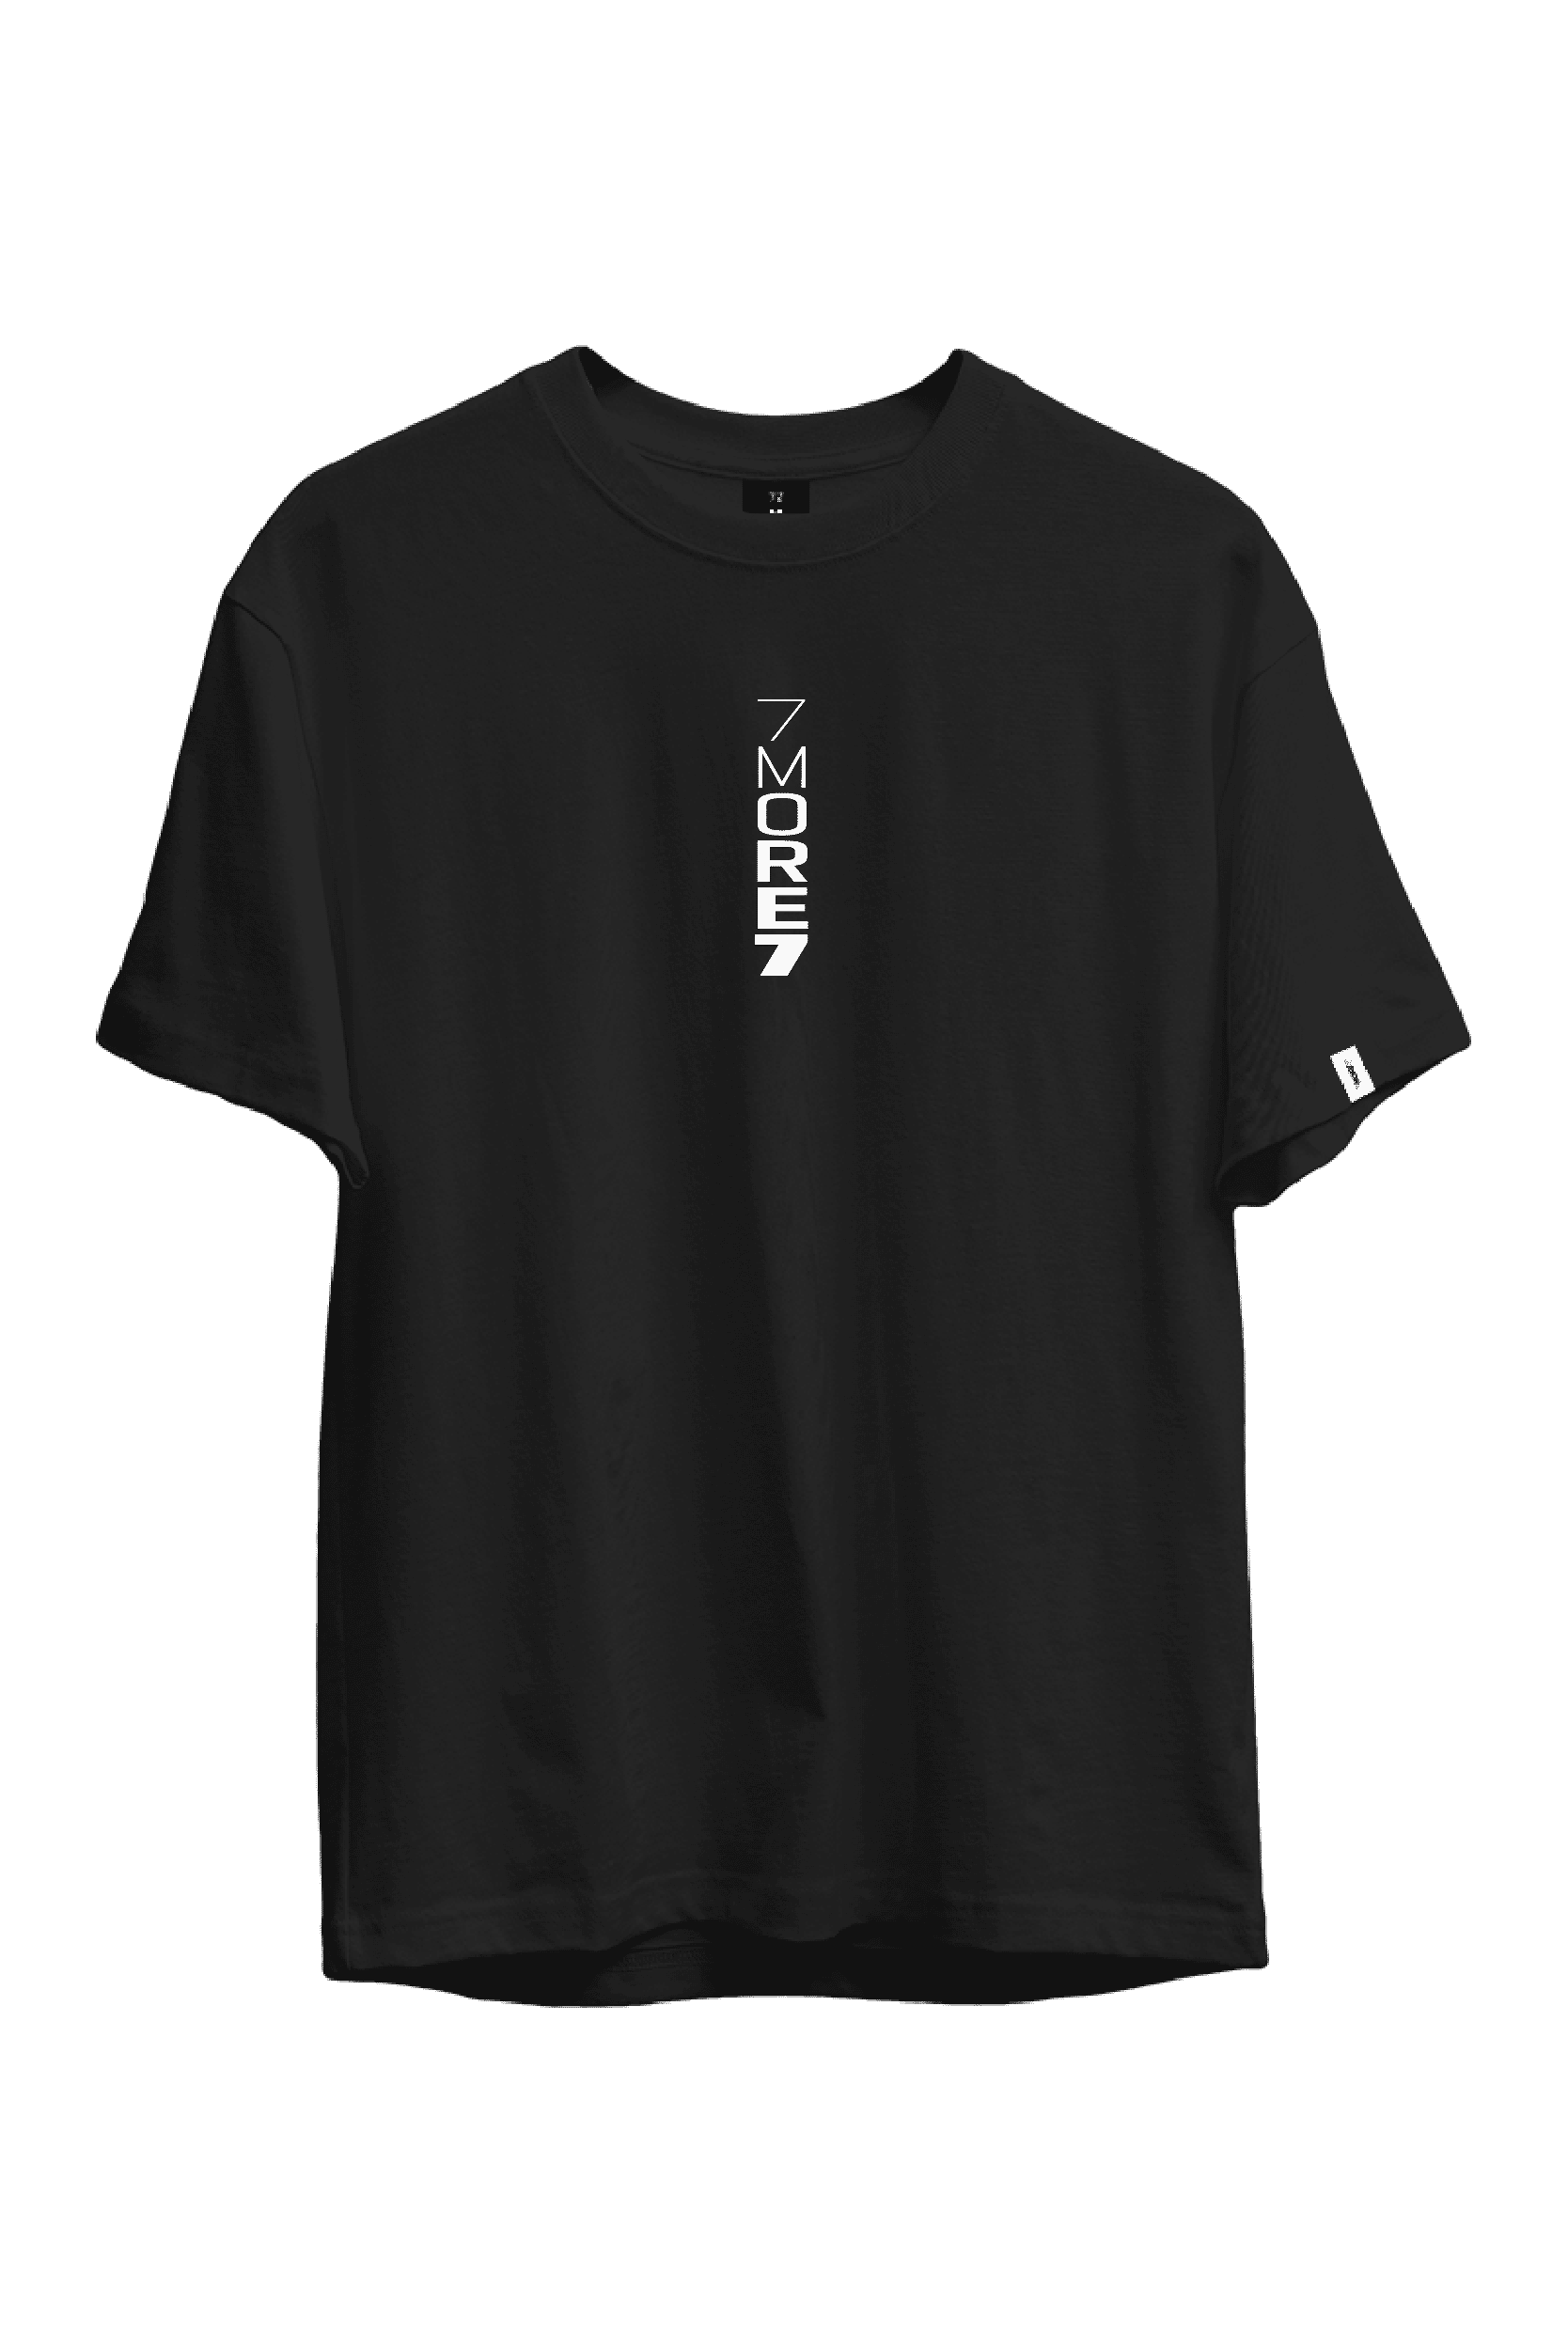 T-shirt Vertical 7MORE7, czarna - 7MORE7